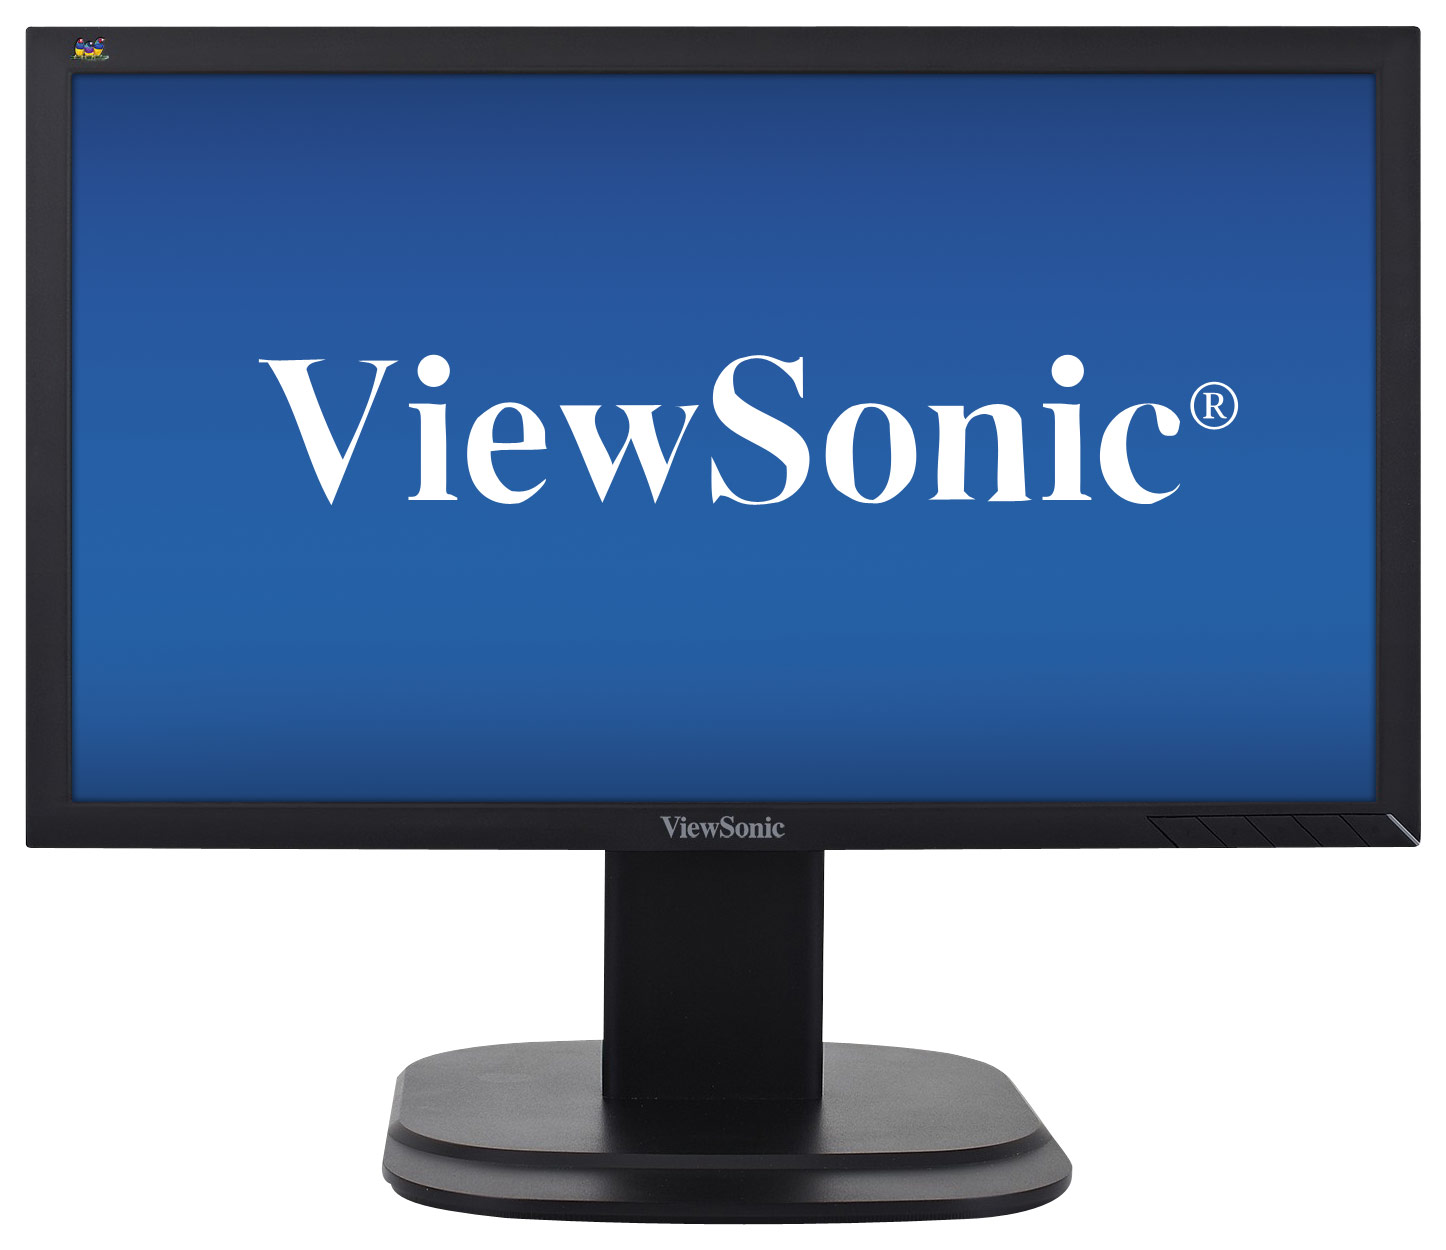 ViewSonic - 19.5" LED Monitor (DisplayPort, VGA) - Black